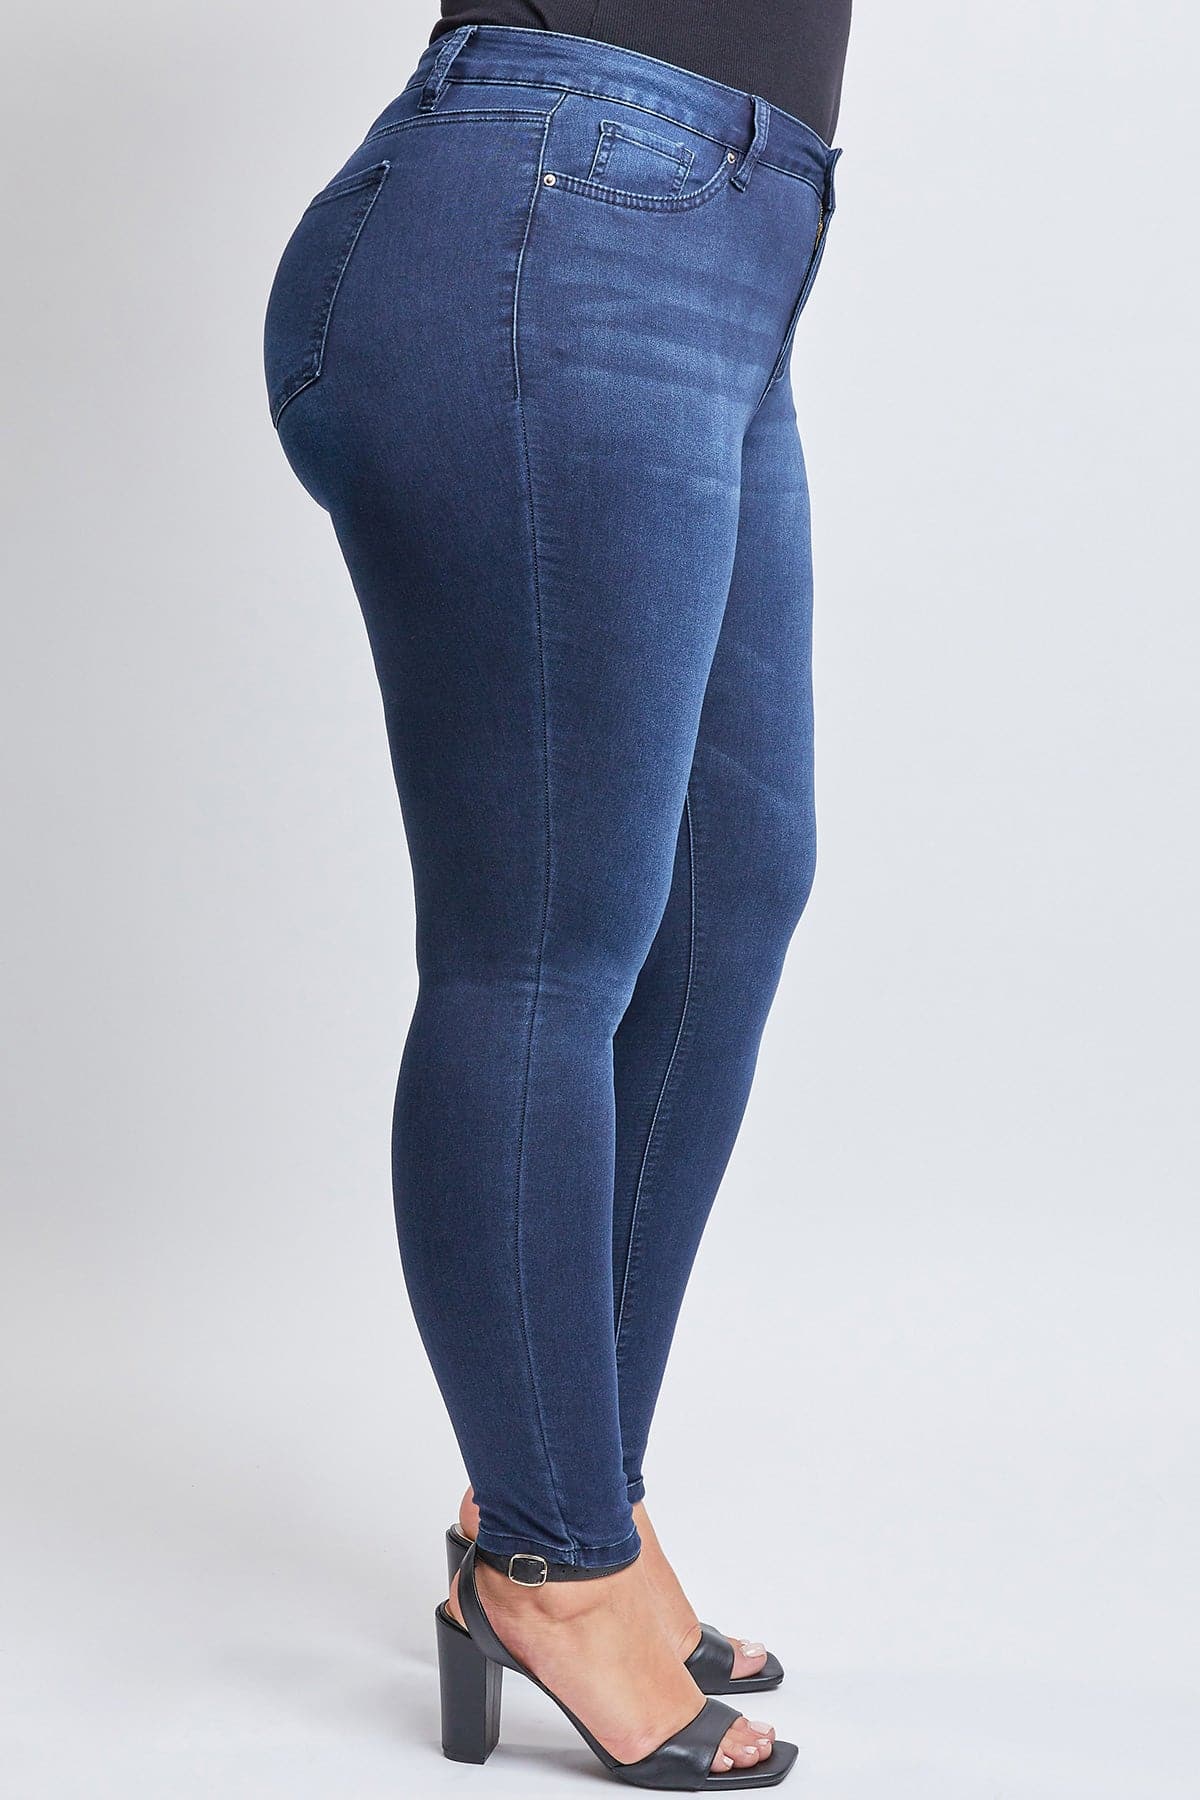 Plus Size Women's Essential HyperDenim Skinny Jeans